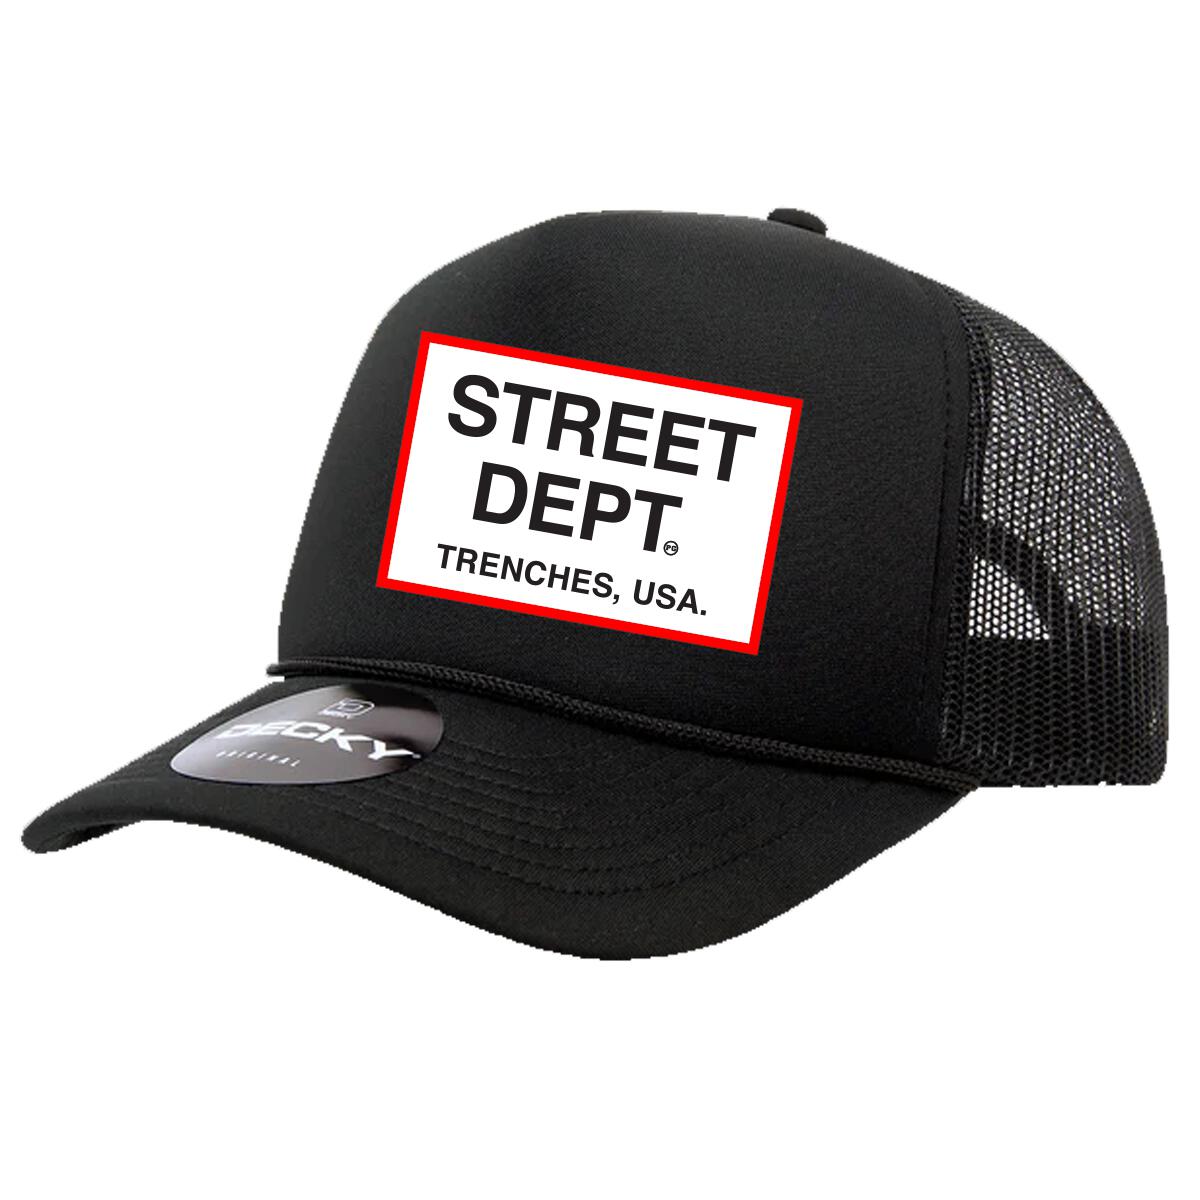 Street Dept Trucker Hat - Black/Red